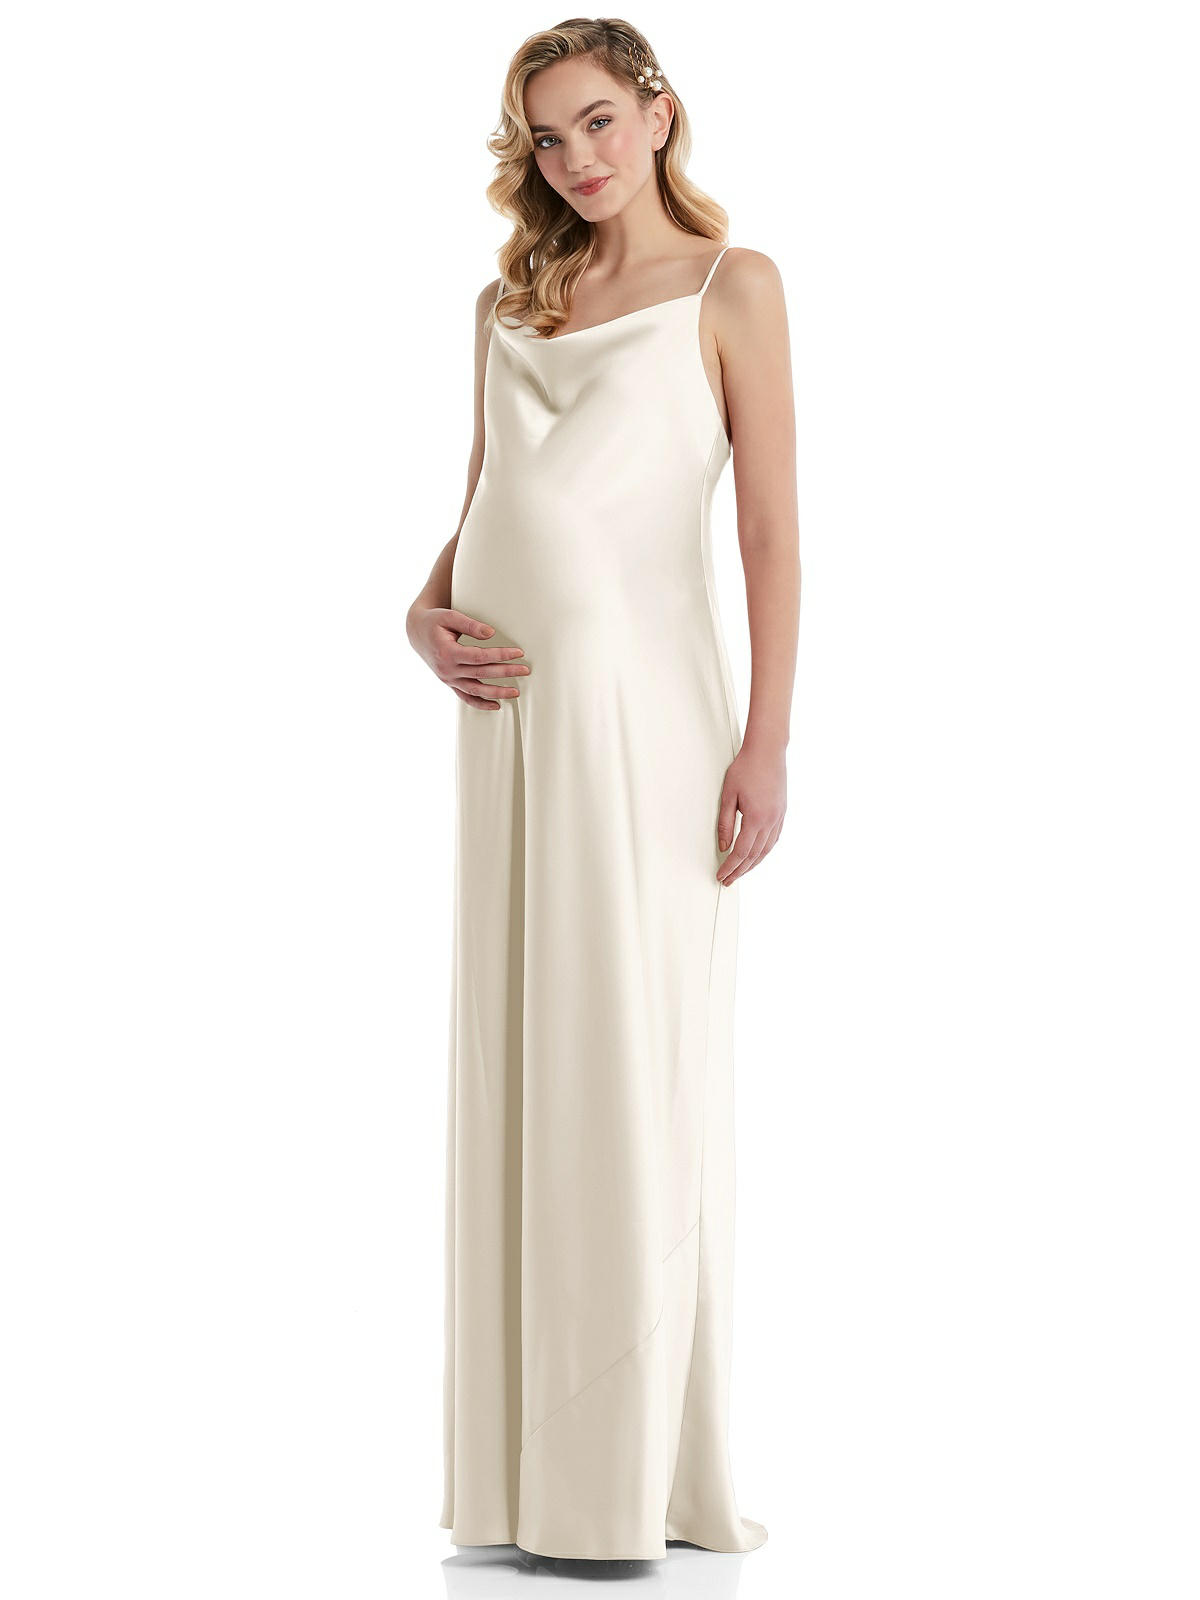 Gracie Maternity Bridesmaid Dress by Dessy – Ivory